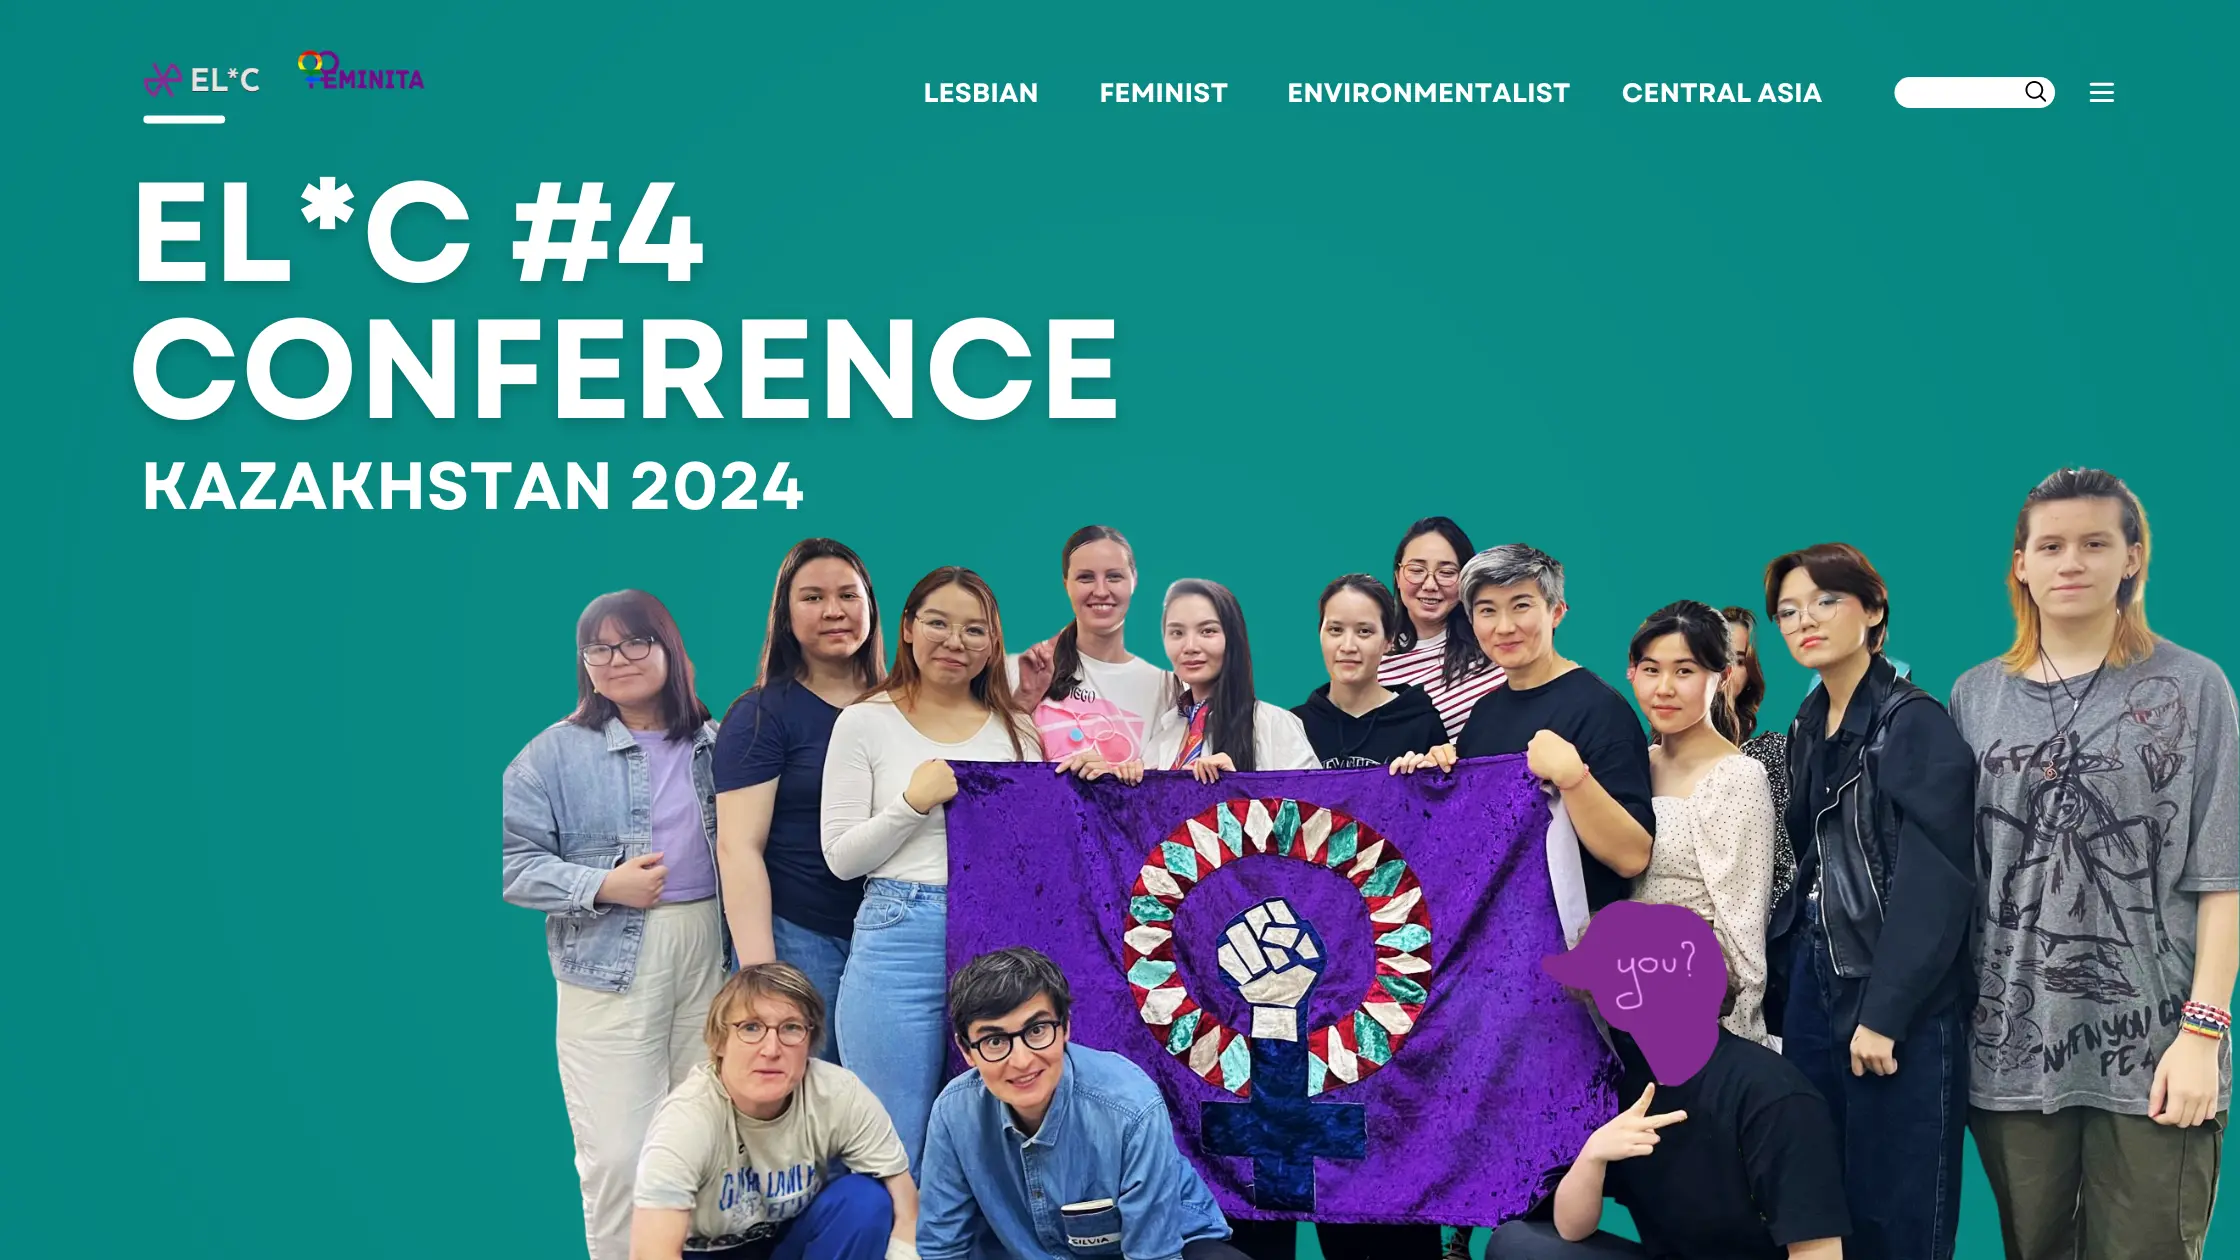 elc conference kazakhstan lesbian feminist